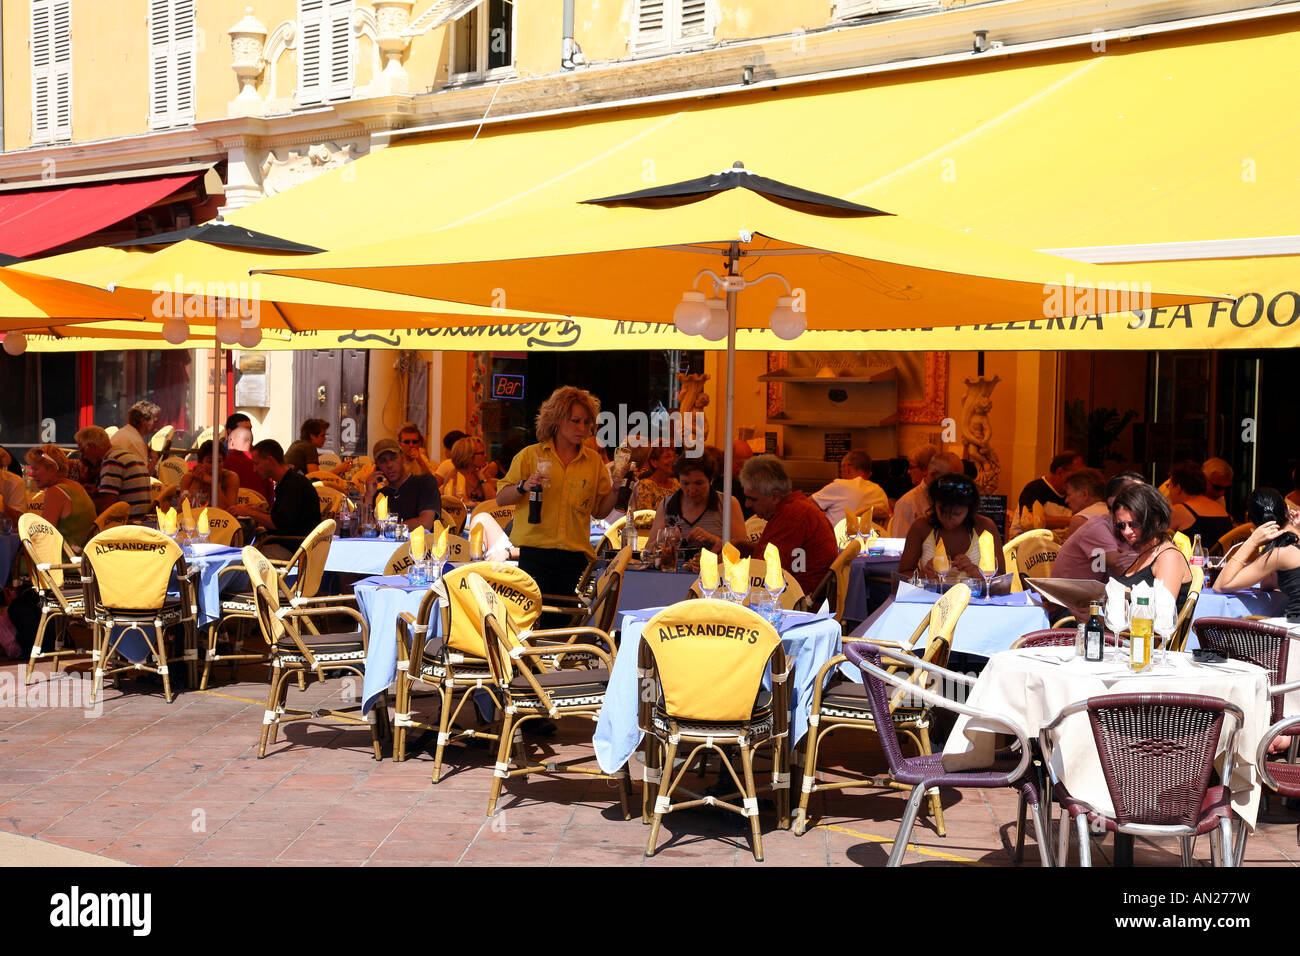 Alexander's Restaurant in Nice Old Town Stock Photo